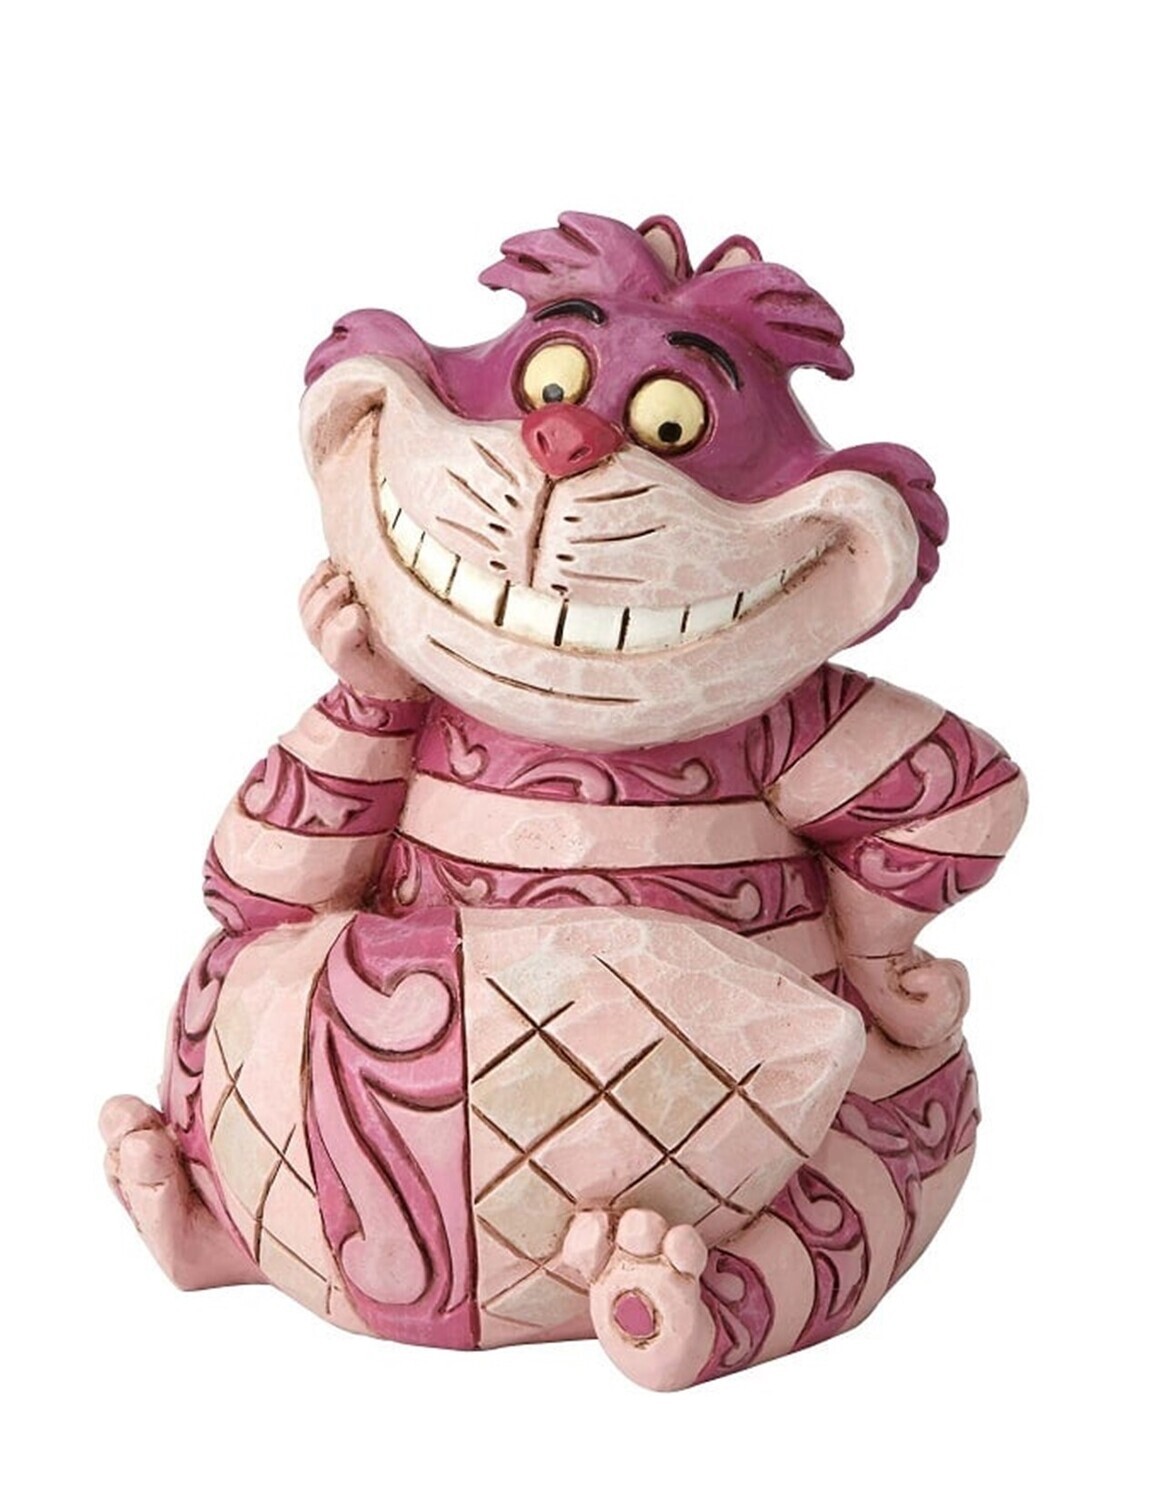 Jim Shore Disney Traditions Cheshire Cat Mini Figurine (4056745)